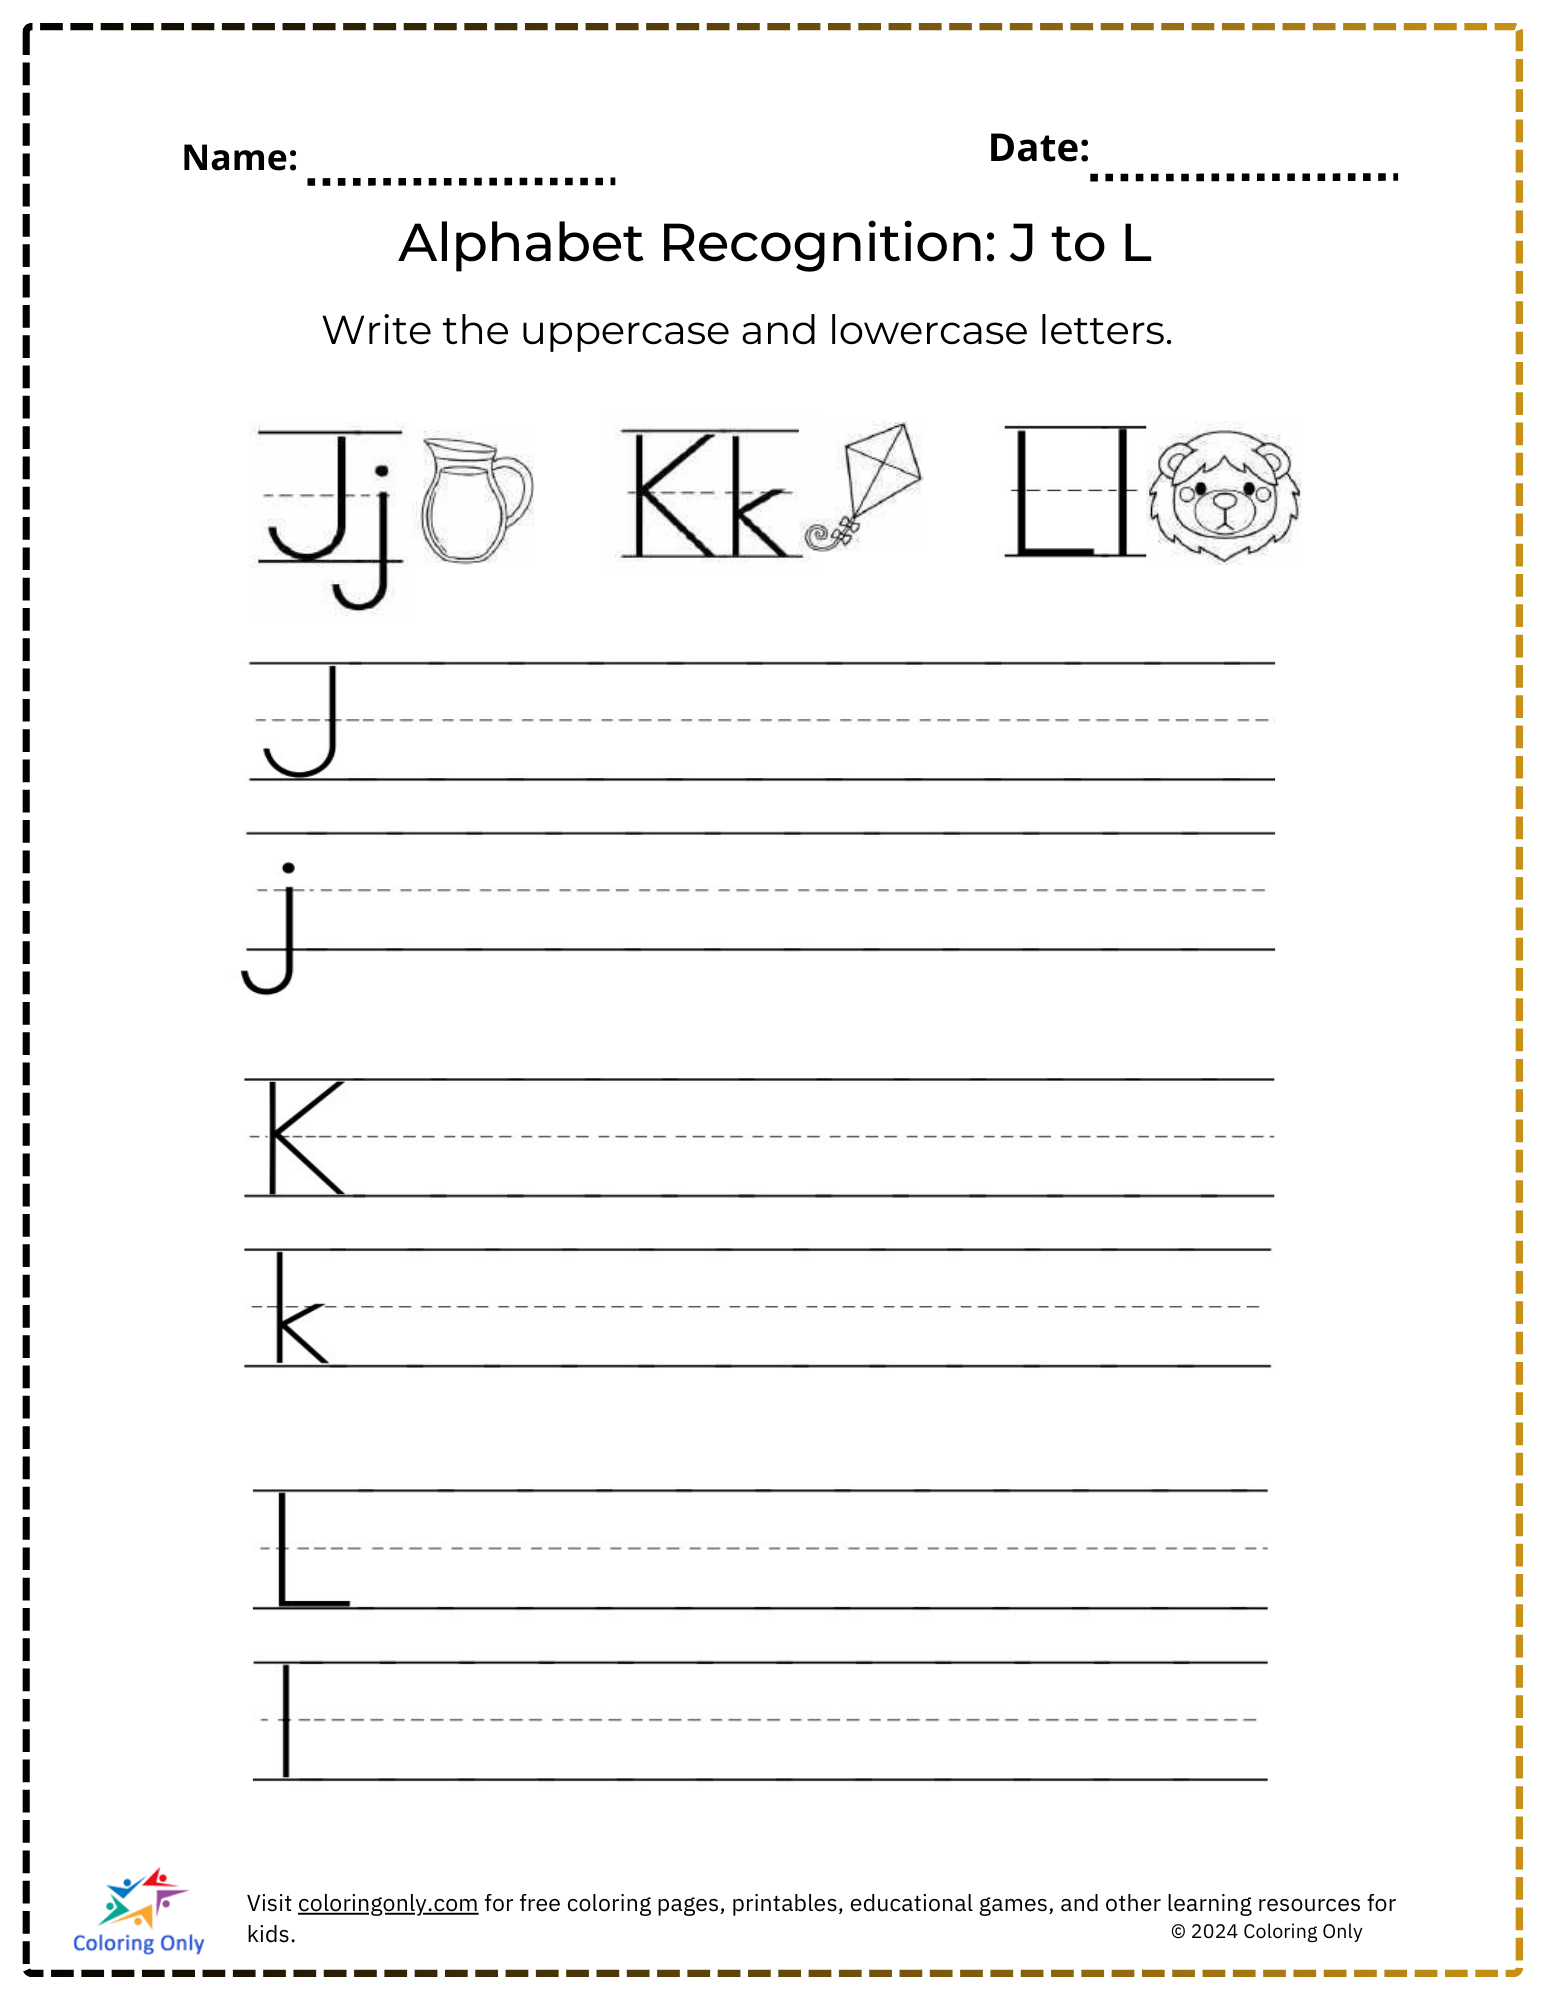 Alphabet Recognition: J to L Free Printable Worksheet